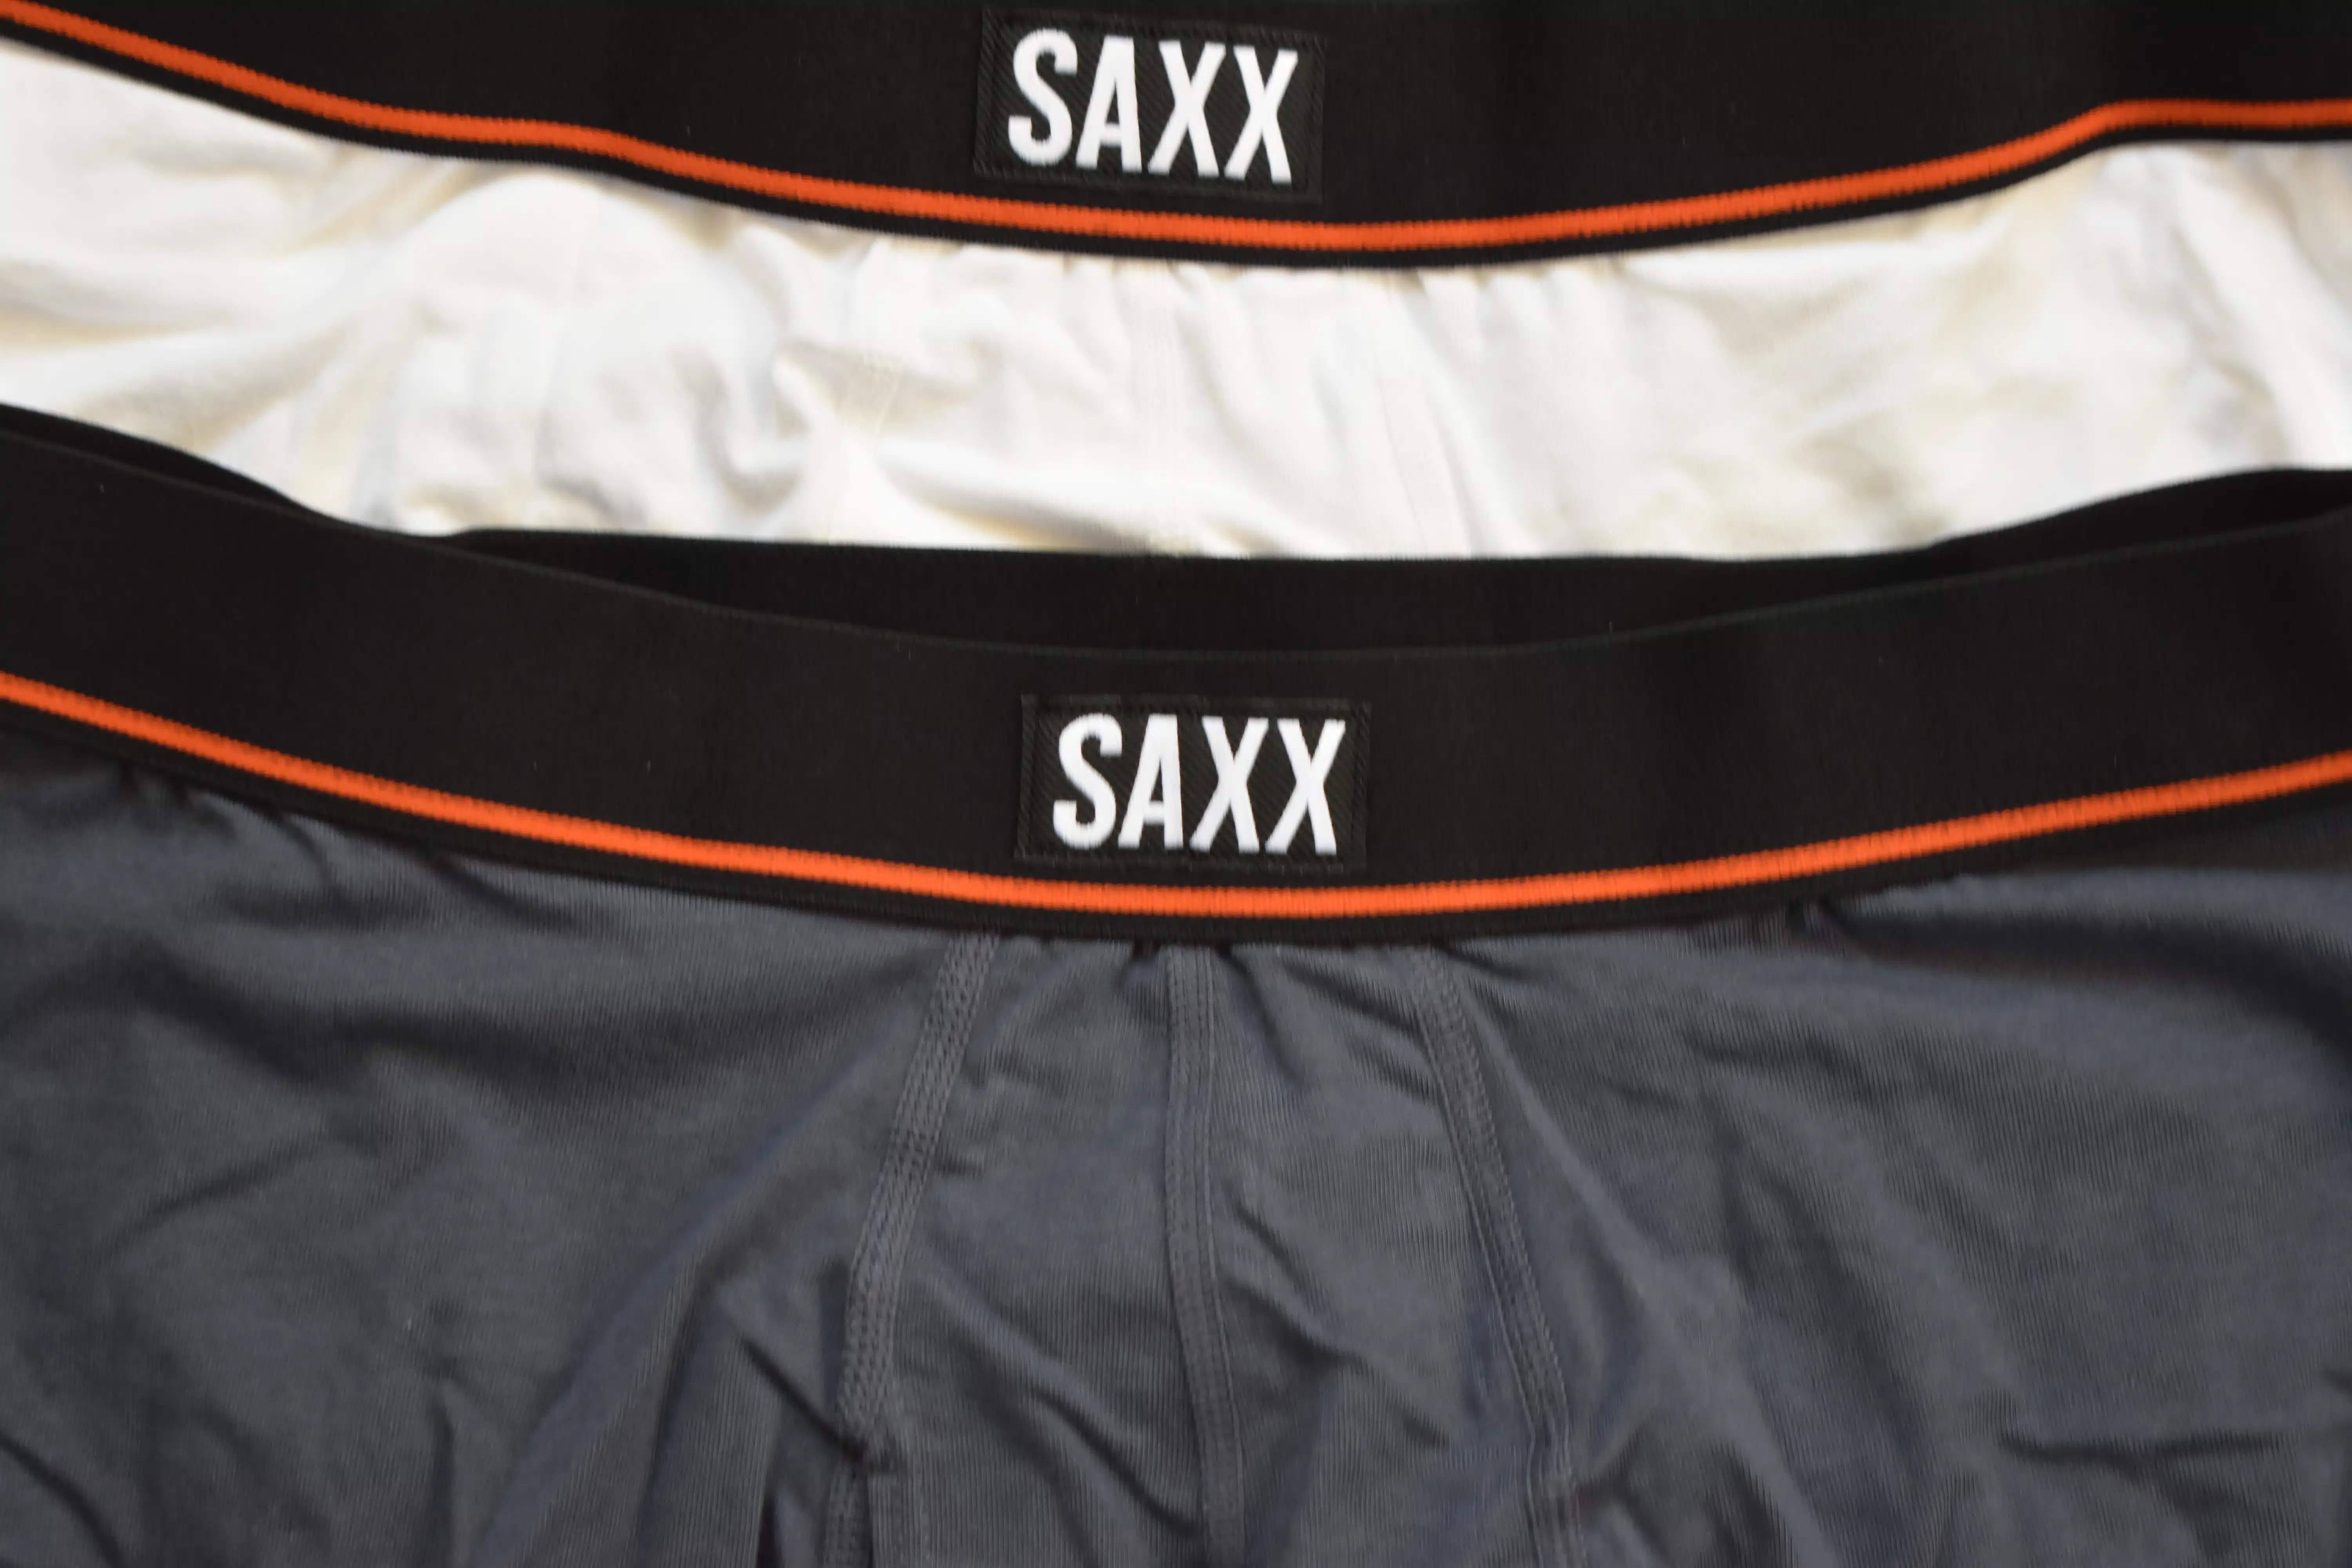 SAXX Review - Worth the Premium Price? 